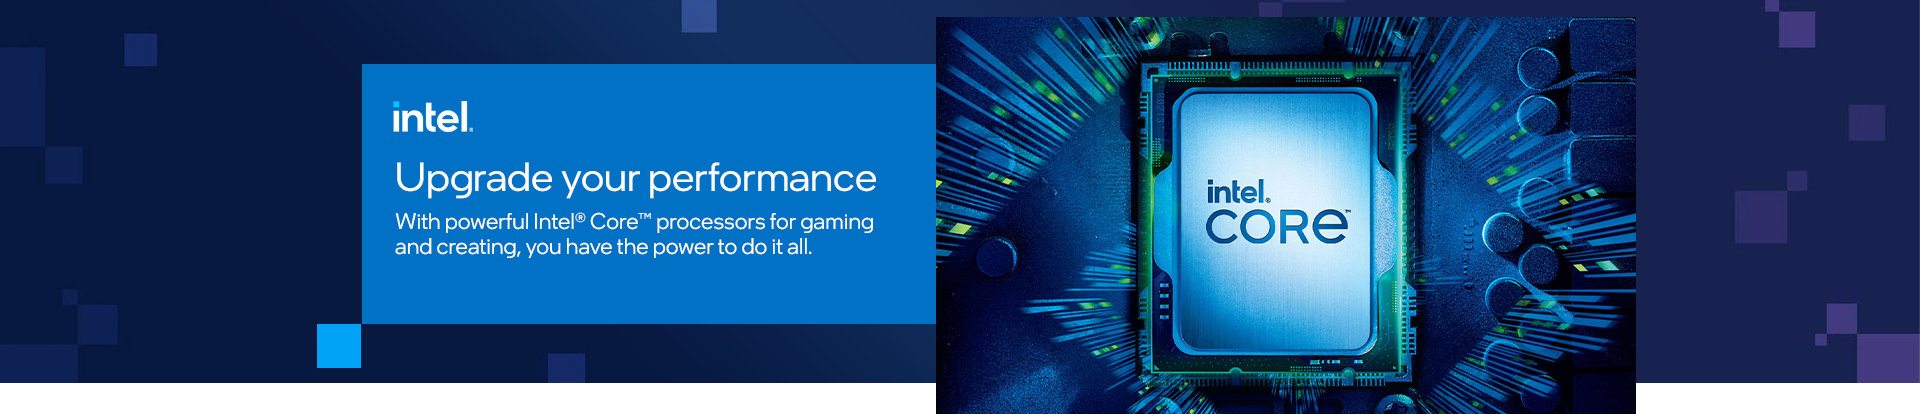 Intel Storepage Refresh 03.17.banner New